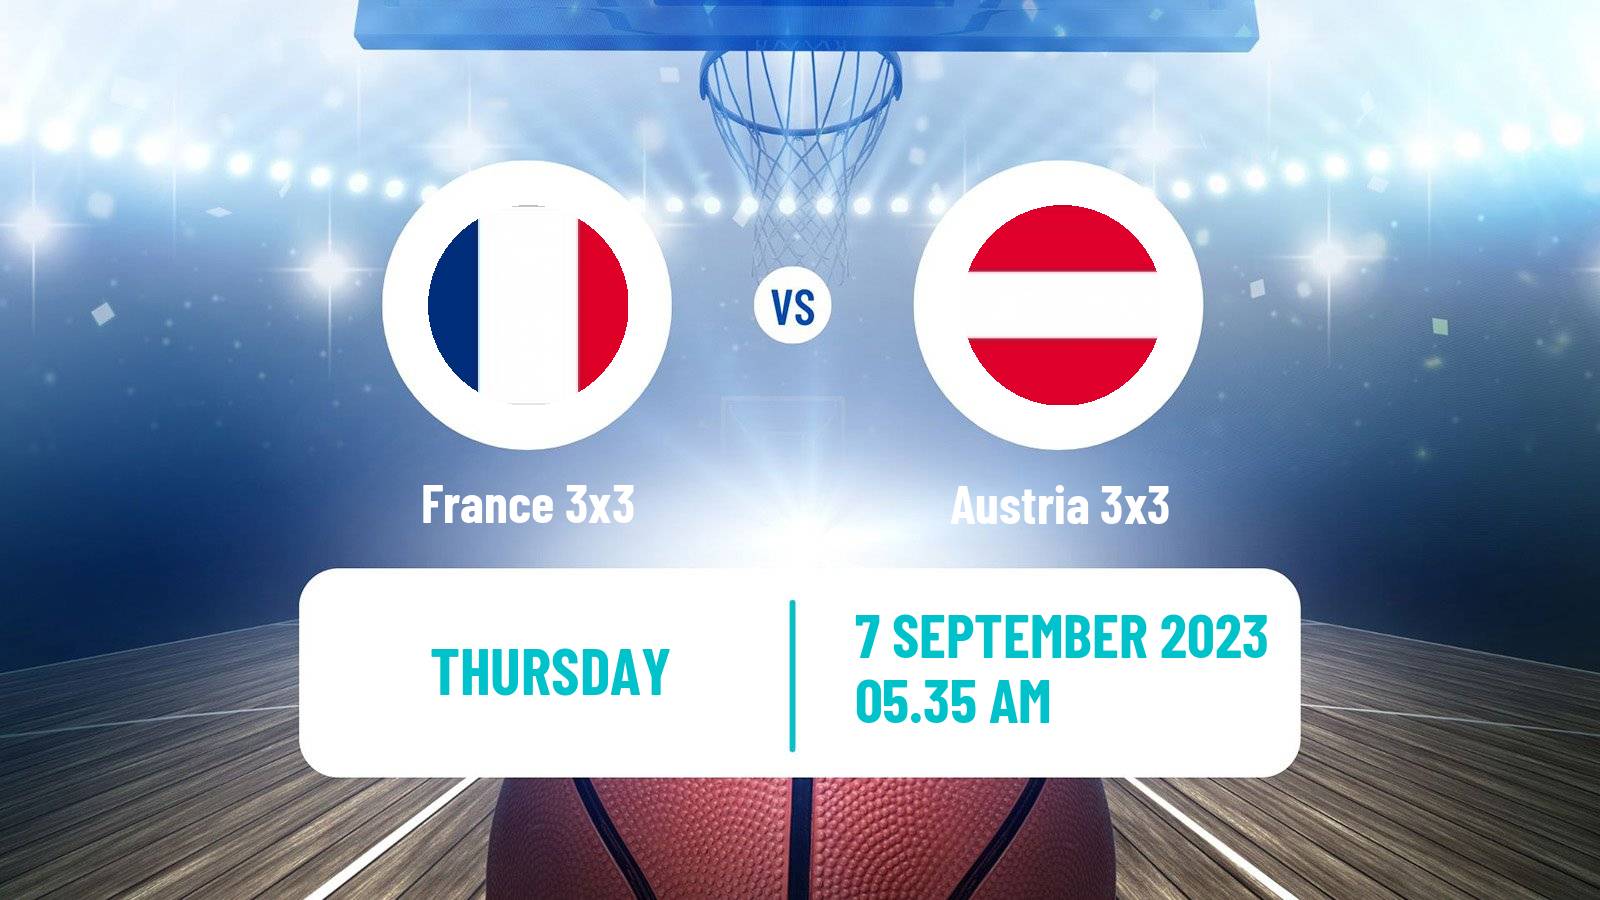 Basketball Europe Cup Basketball 3x3 France 3x3 - Austria 3x3